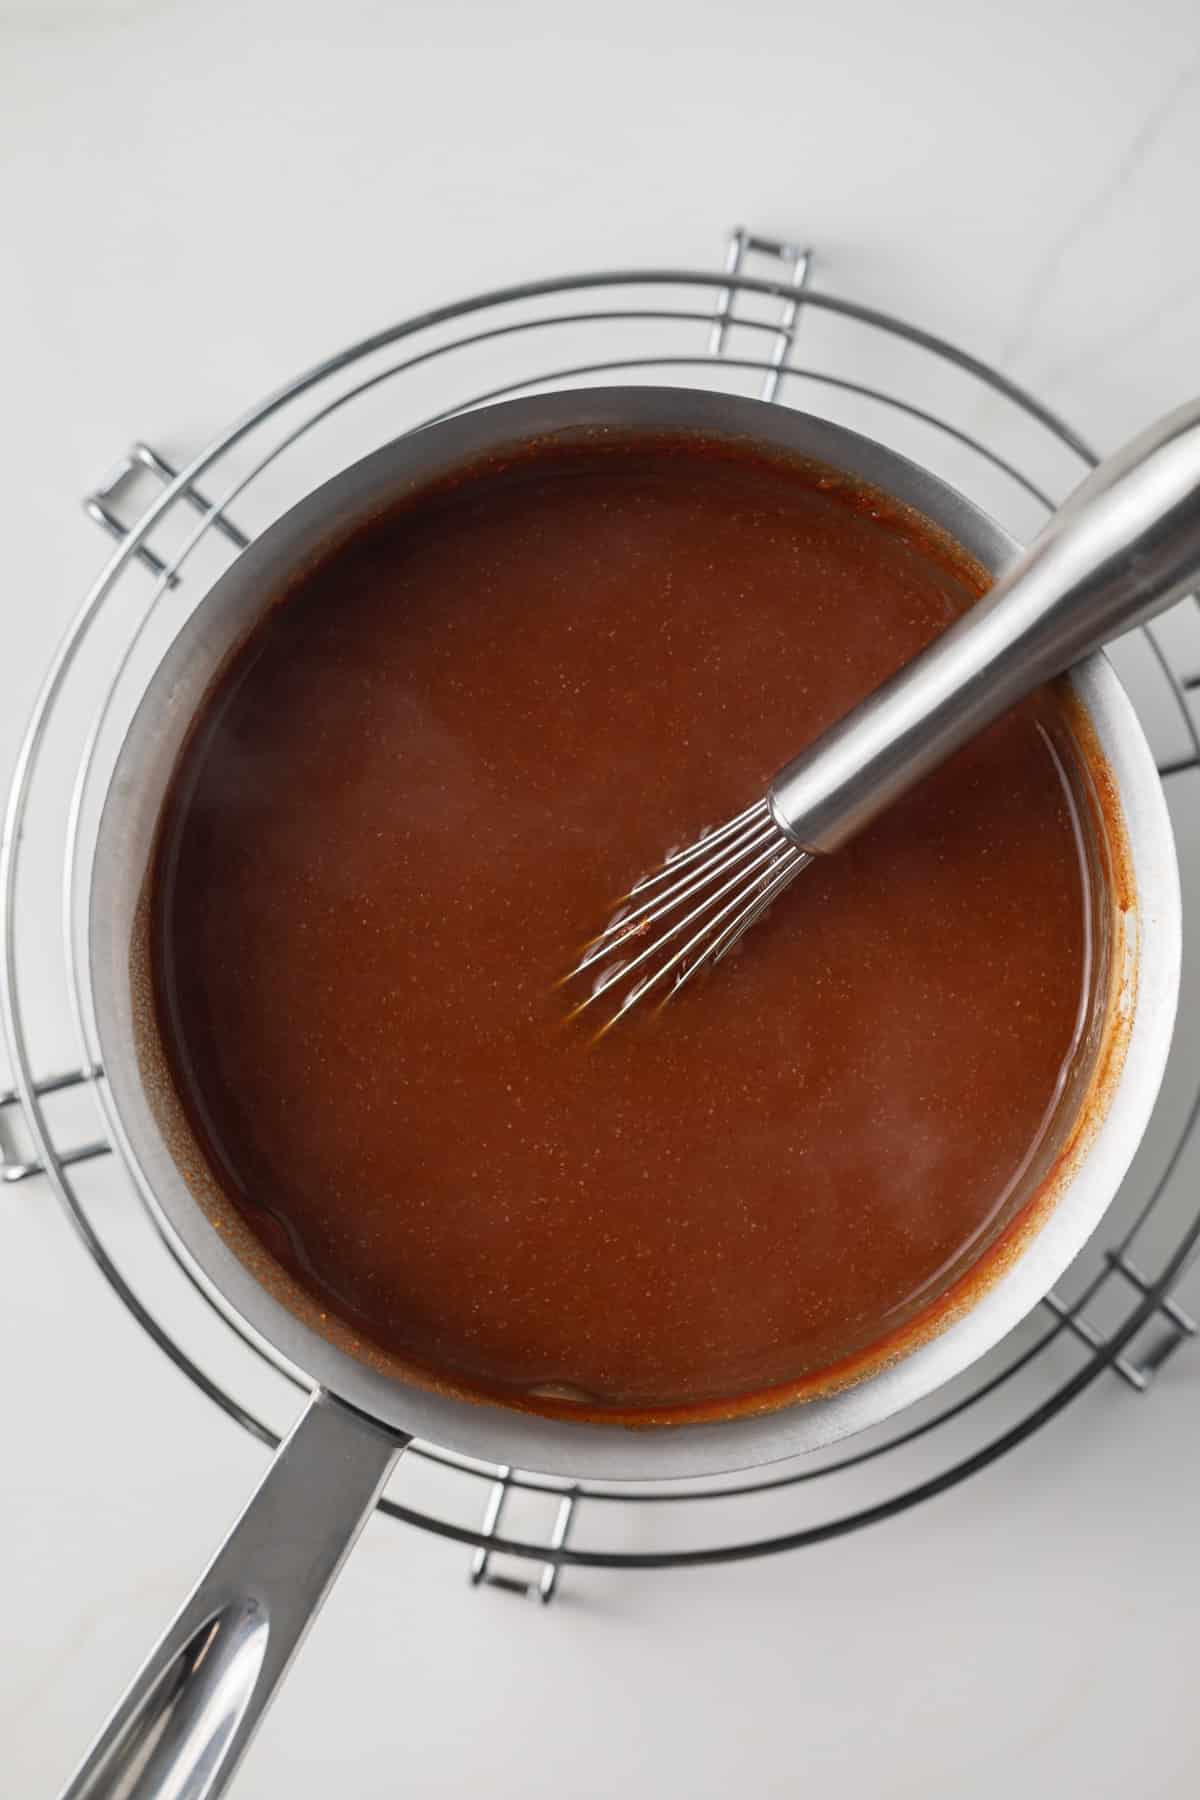 Pineapple orange sauce in a saucepan.